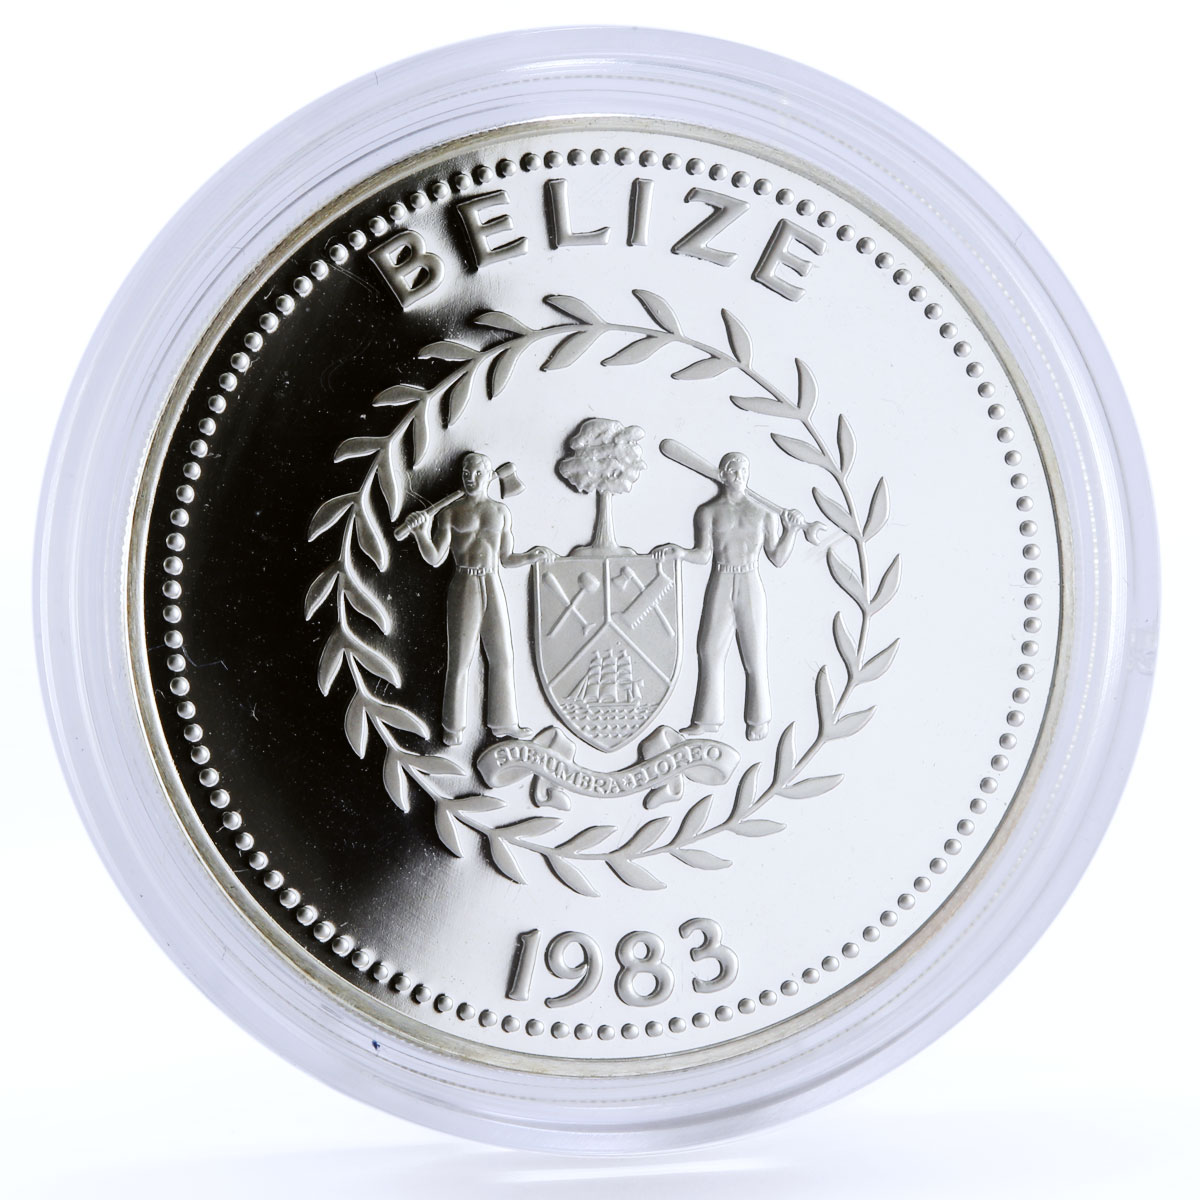 Belize 25 dollars Coronation Jubilee Royal Symbols silver coin 1983